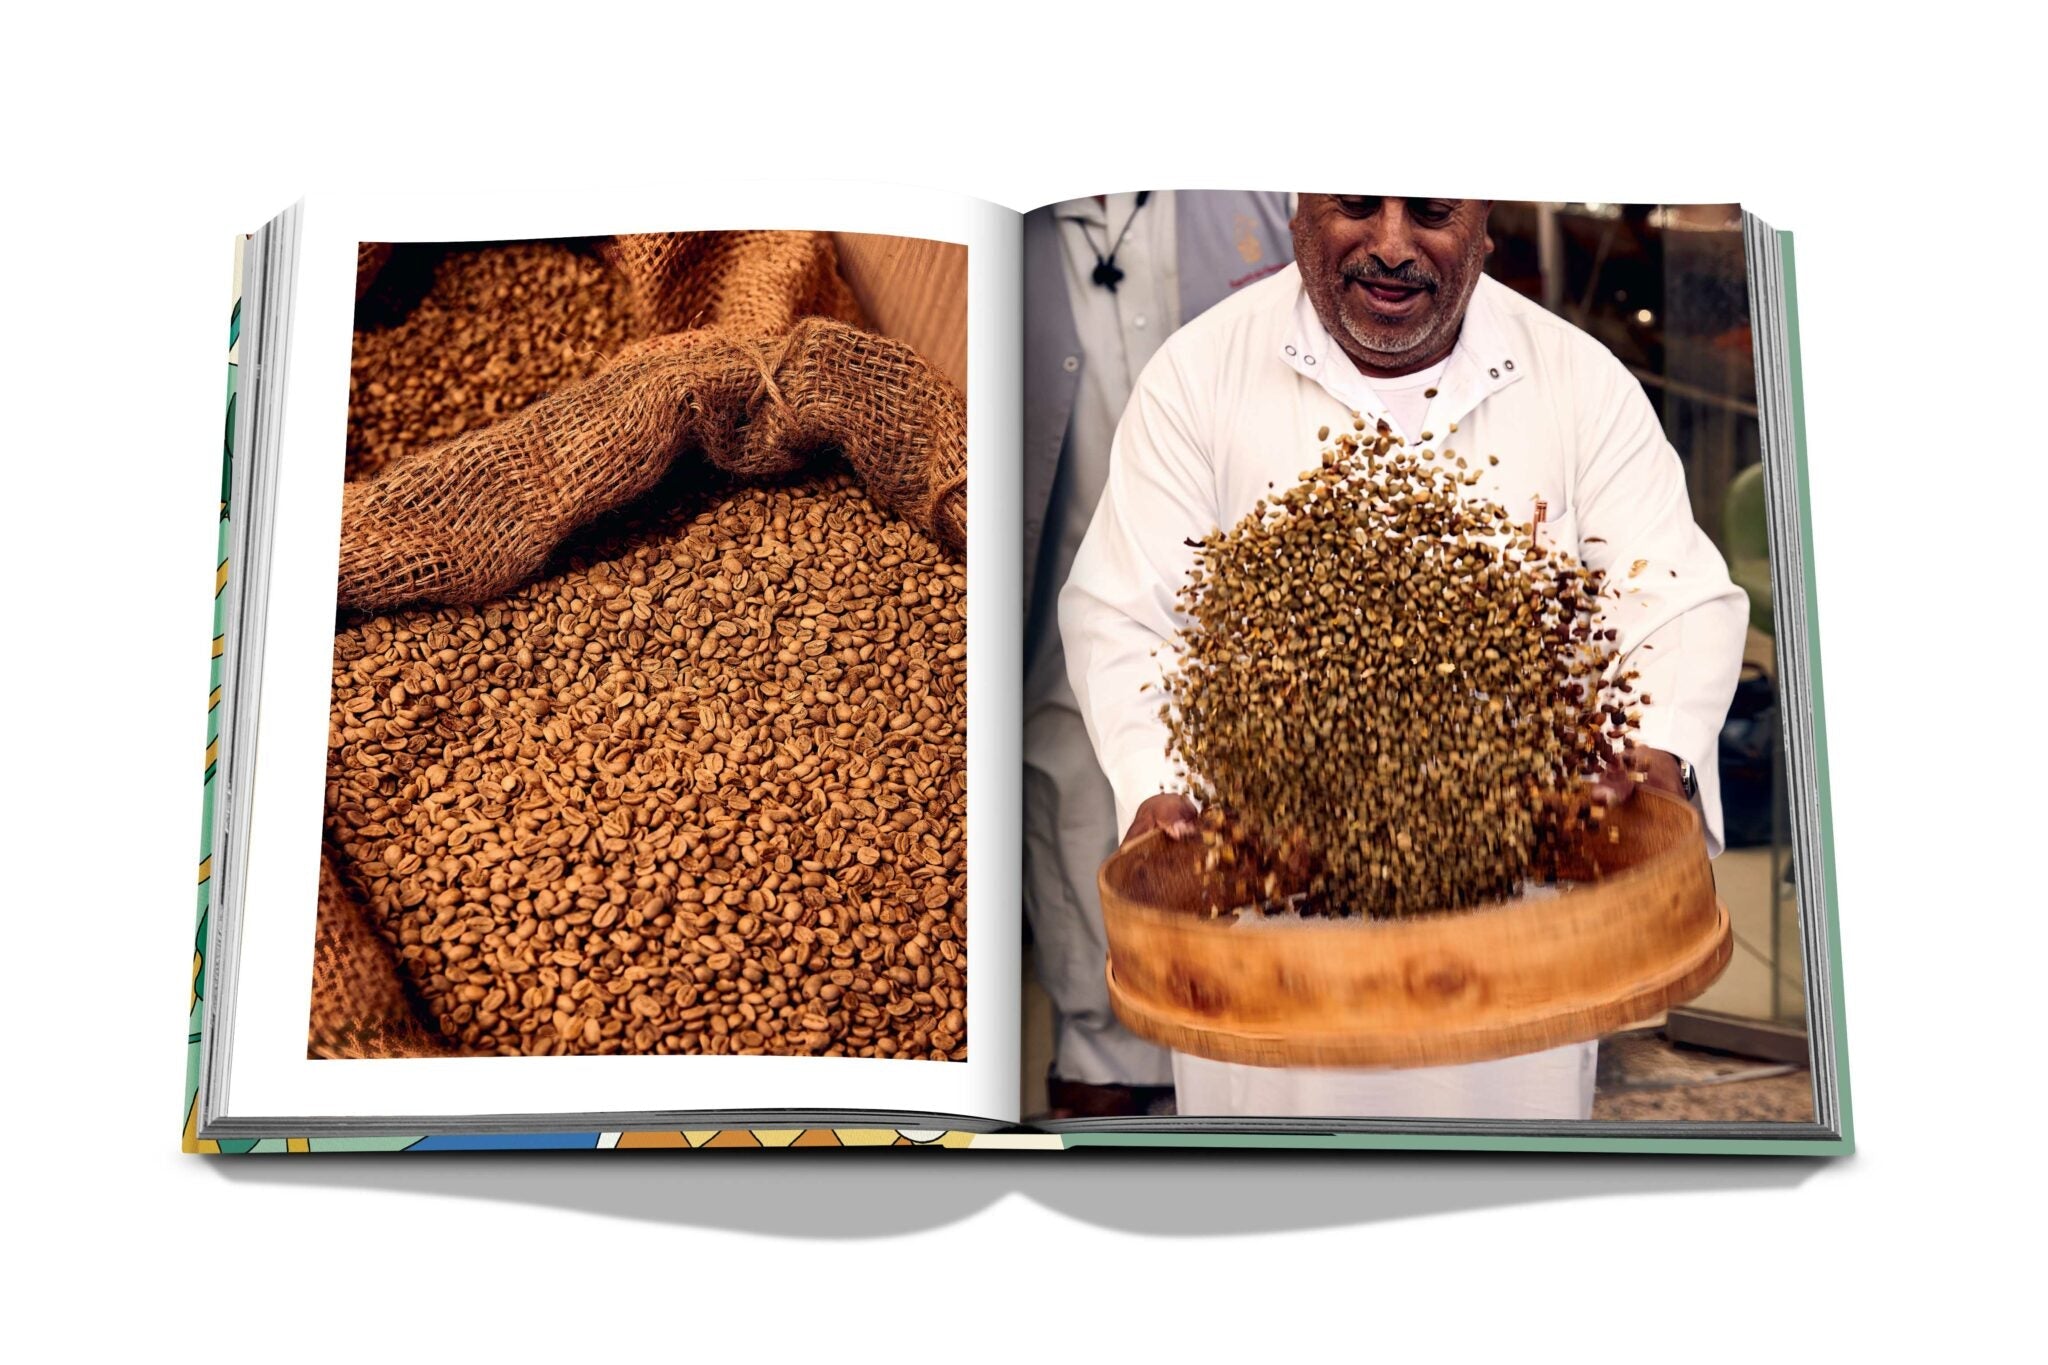 Assouline Saudi Coffee: kultura gościnności